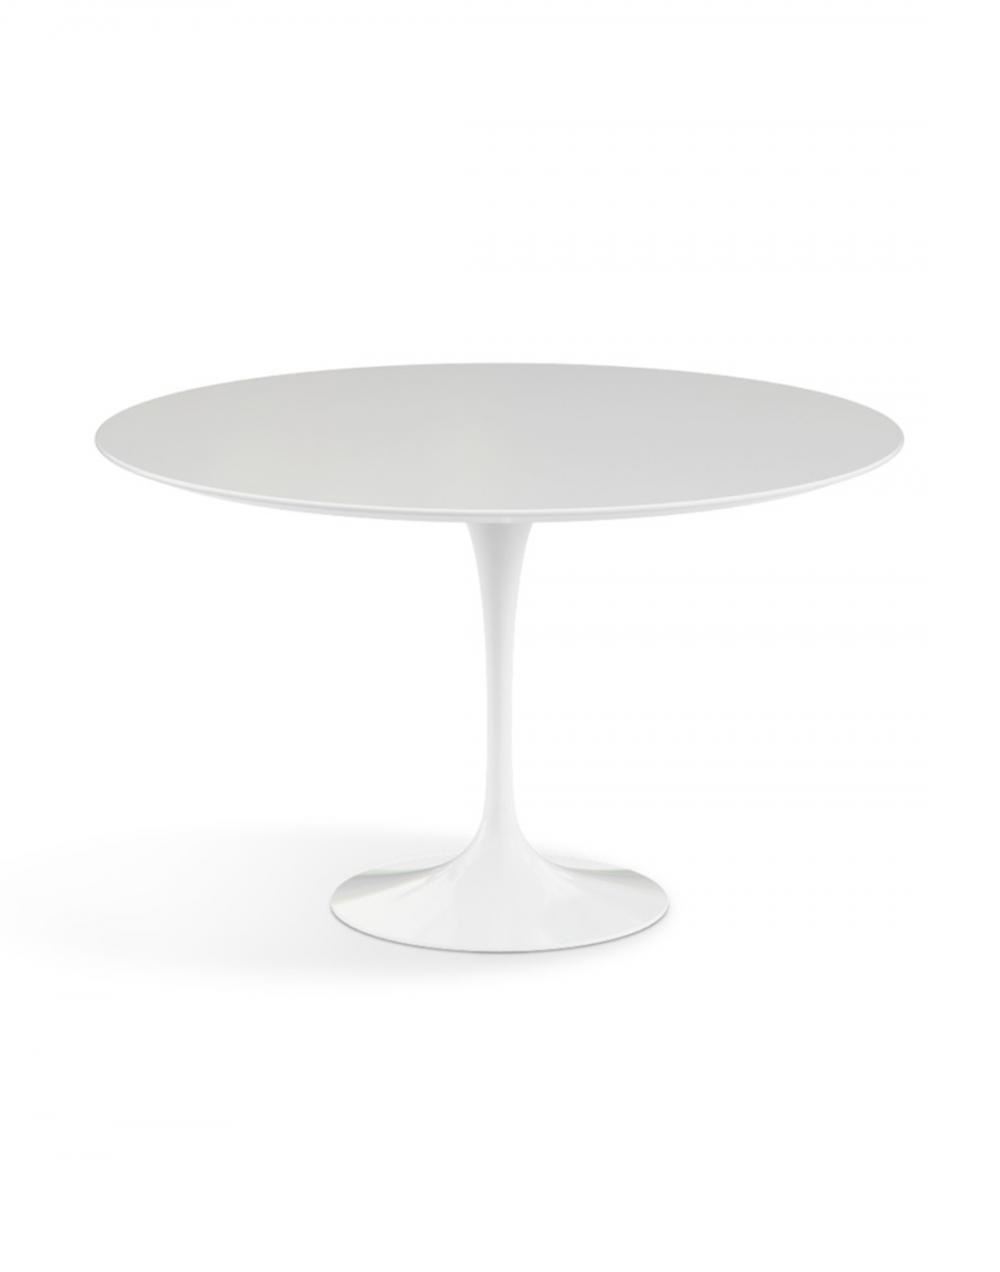 Saarinen Dining Table Round Large White Base Acrylic Stone Top